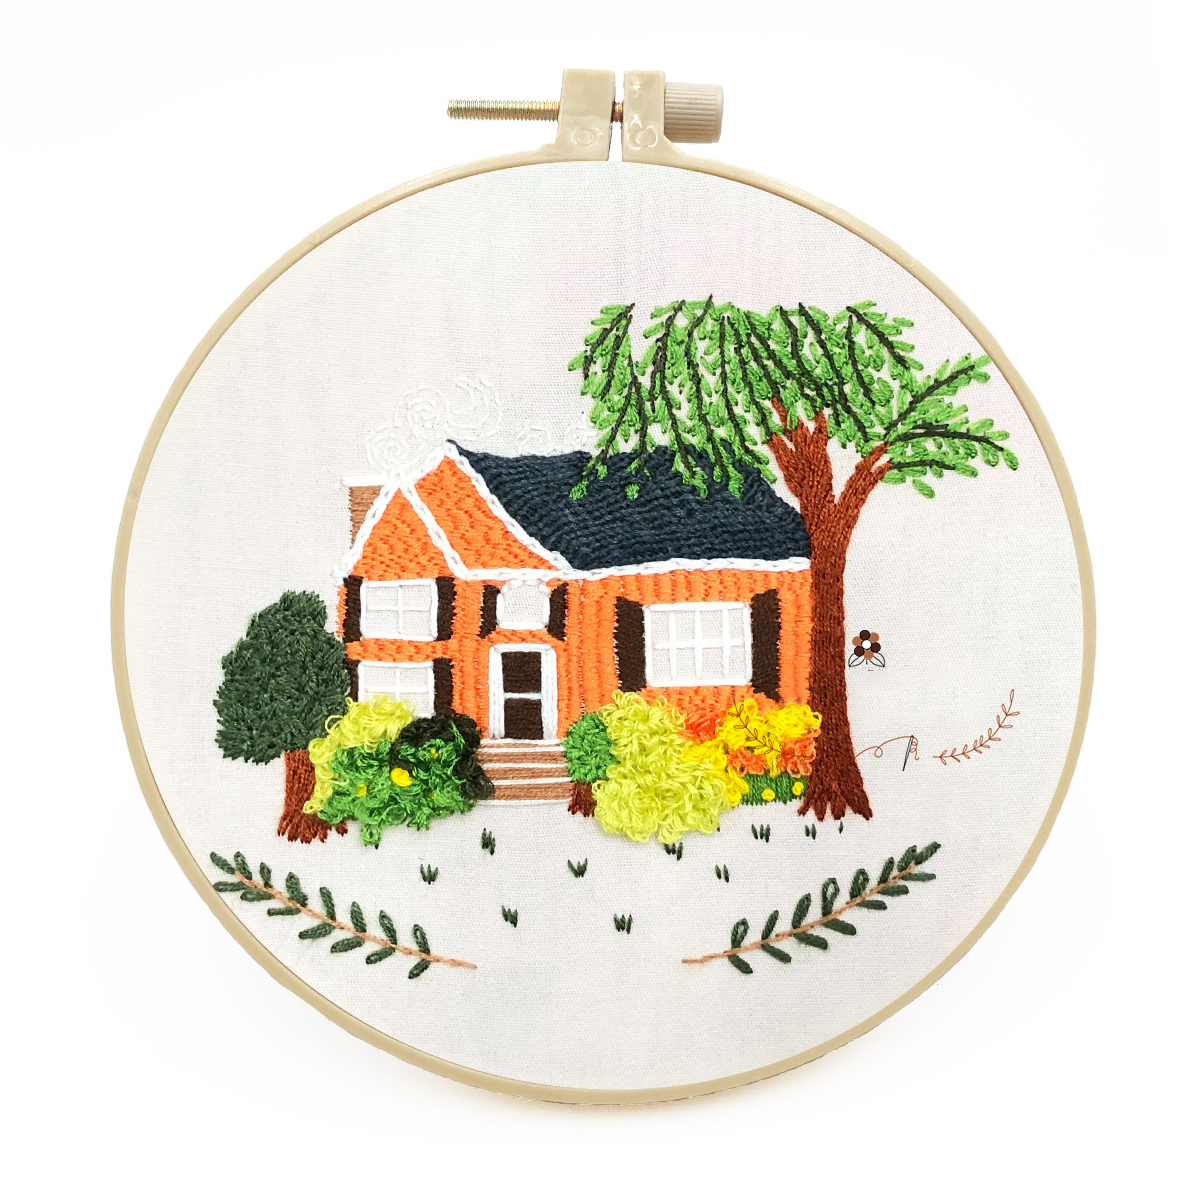 DIY Handmade Embroidery Cross stitch kit - Romantic Cottage Pattern